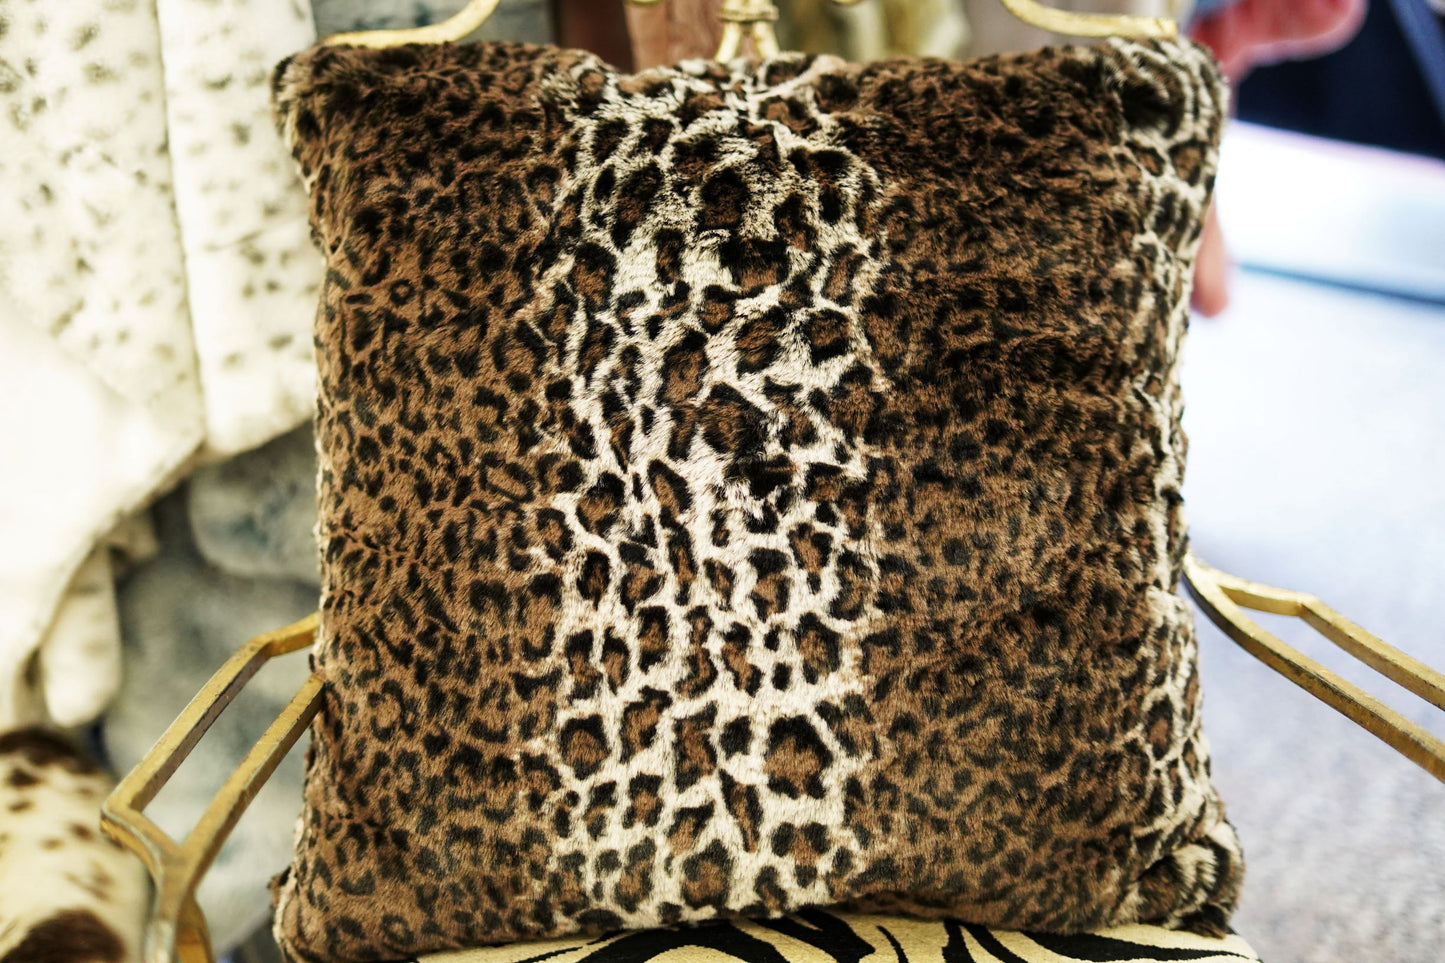 Leopard Cheetah Jaguar Feline Animal Print Soft Cozy Fuzzy Faux Fur Throw Pillow